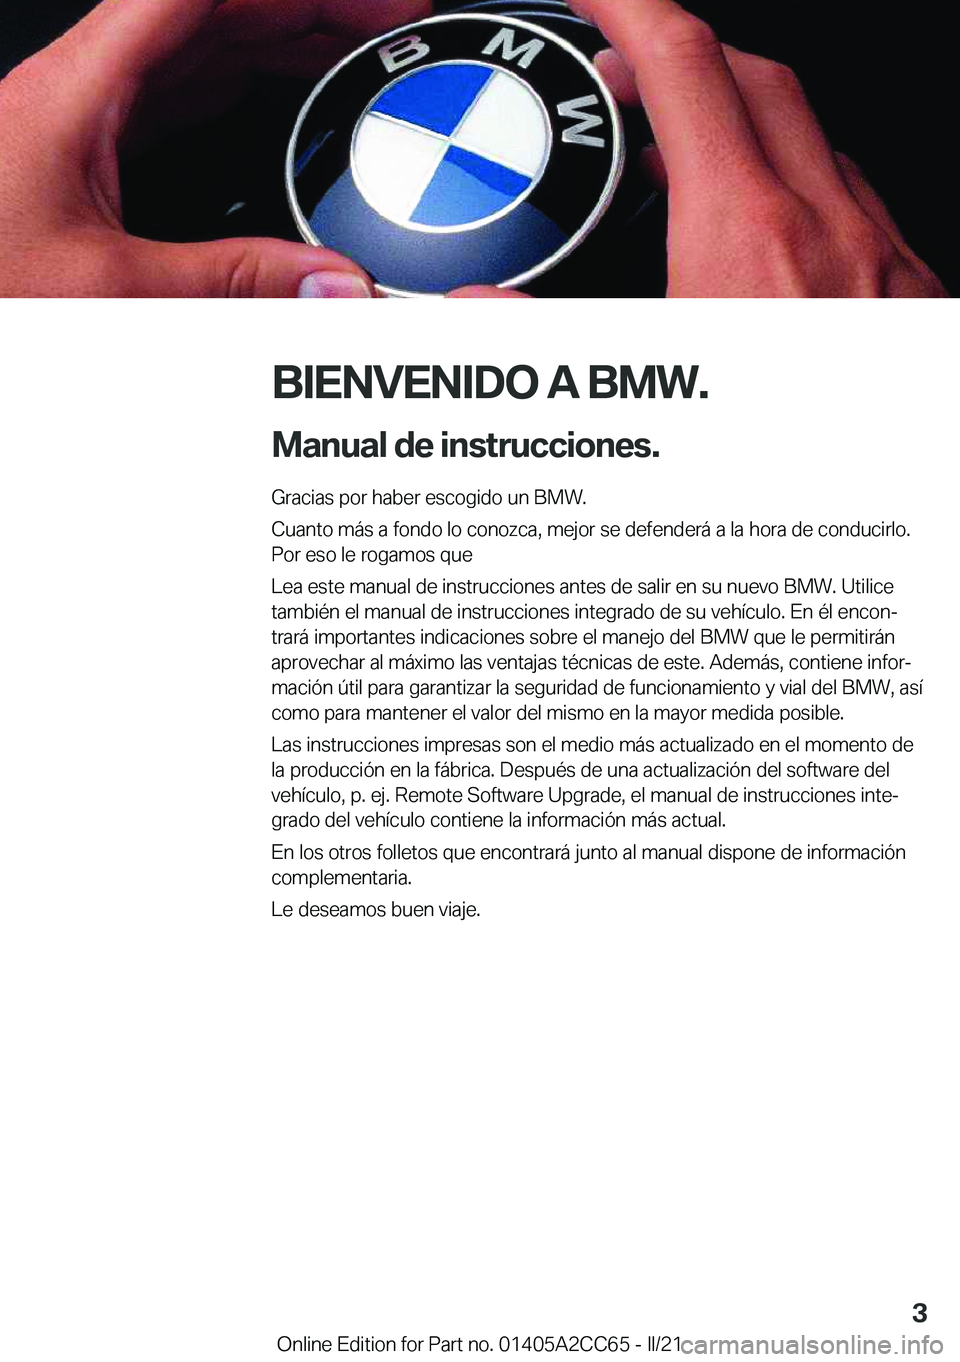 BMW 8 SERIES GRAN COUPE 2022  Manuales de Empleo (in Spanish) �B�I�E�N�V�E�N�I�D�O��A��B�M�W�.
�M�a�n�u�a�l��d�e��i�n�s�t�r�u�c�c�i�o�n�e�s�. �G�r�a�c�i�a�s��p�o�r��h�a�b�e�r��e�s�c�o�g�i�d�o��u�n��B�M�W�.
�C�u�a�n�t�o��m�